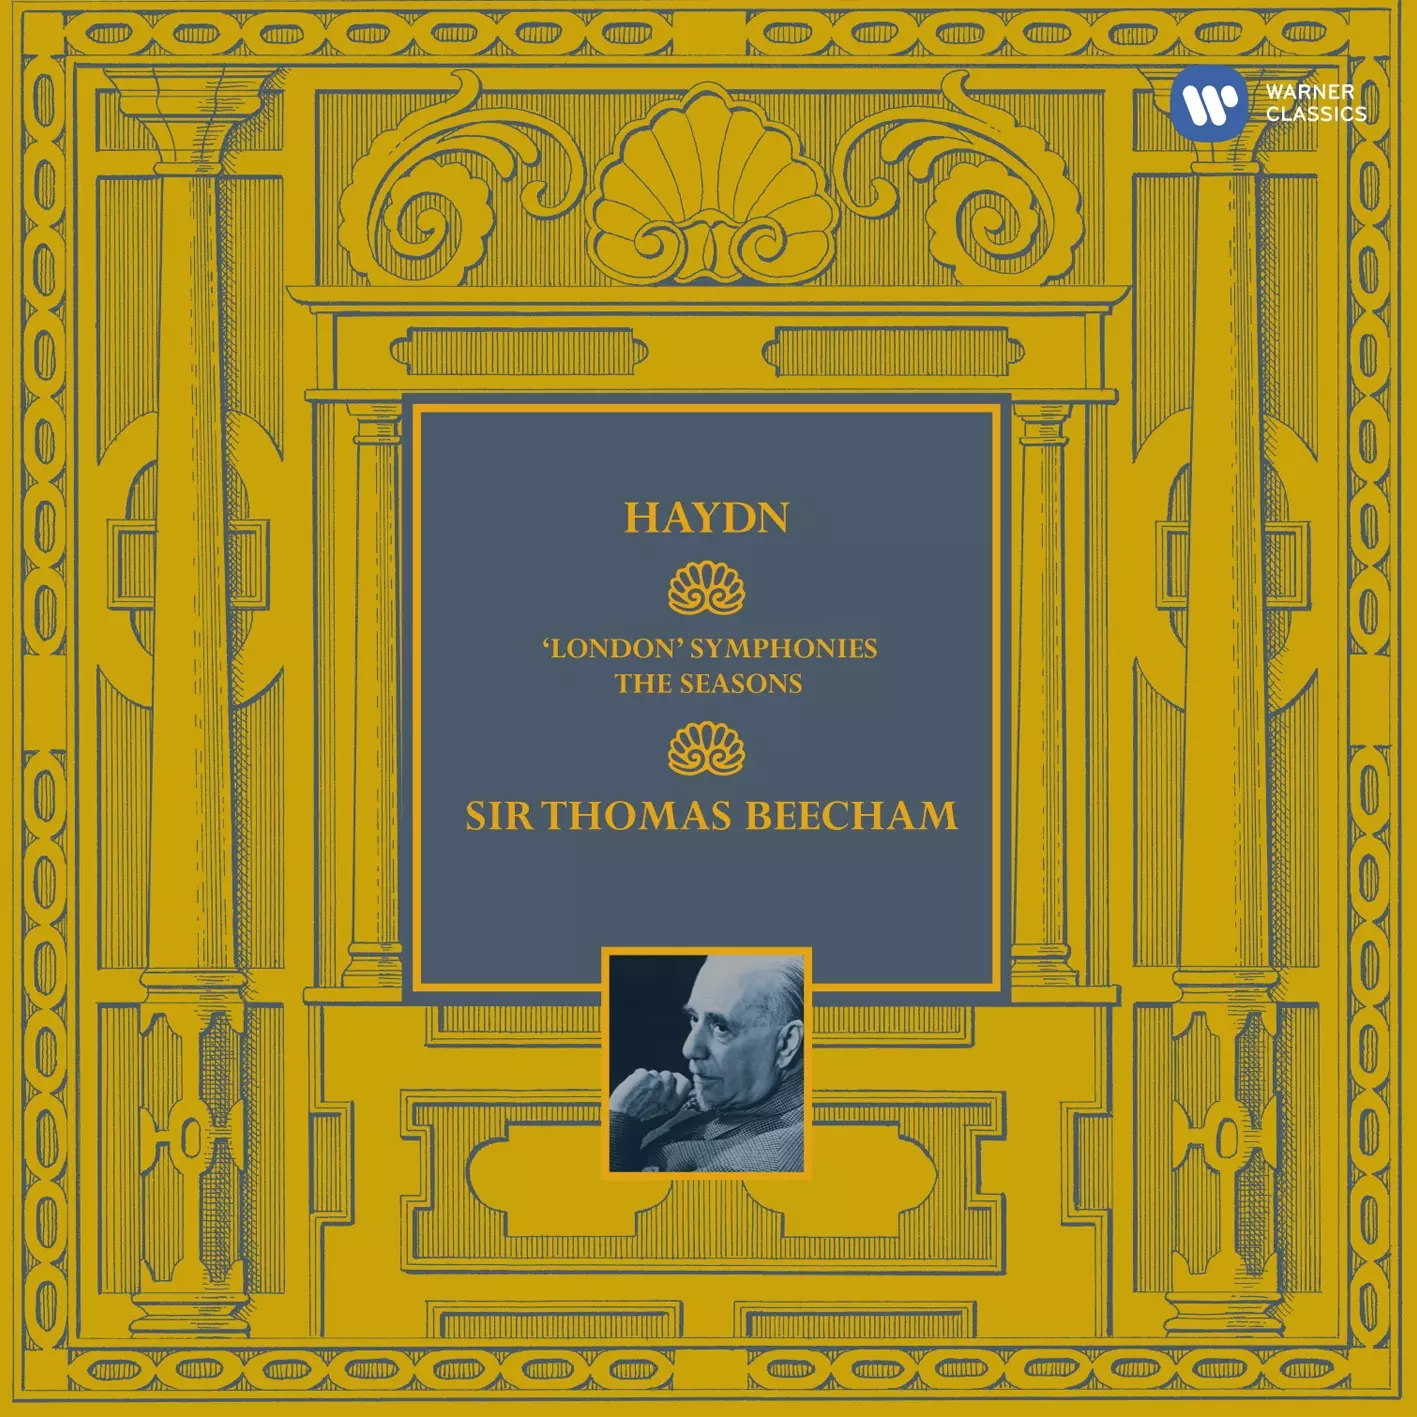 Haydn: 'London' Symphonies - The Seasons